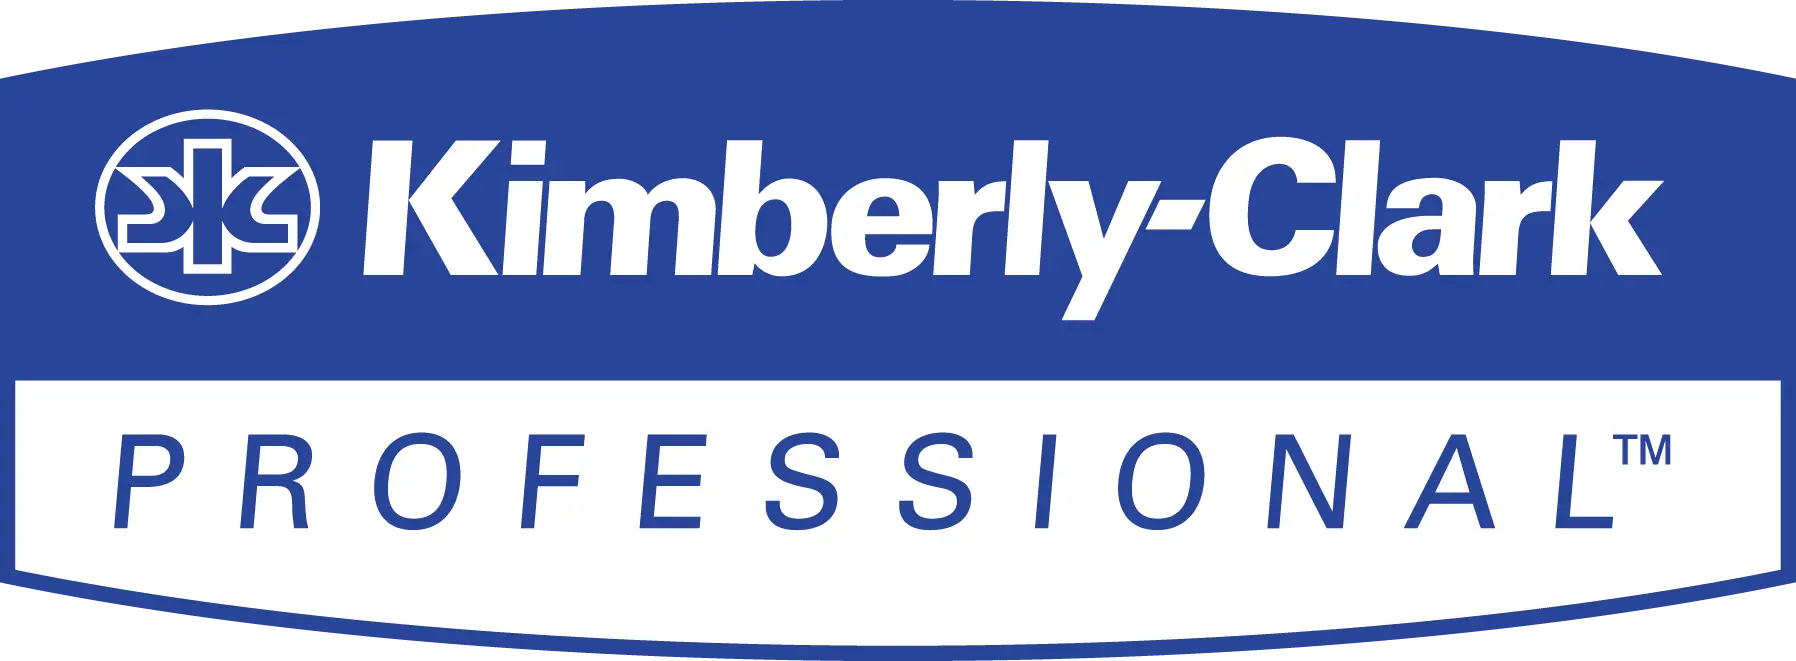 Торговая марка Kimberly-Clark Professional